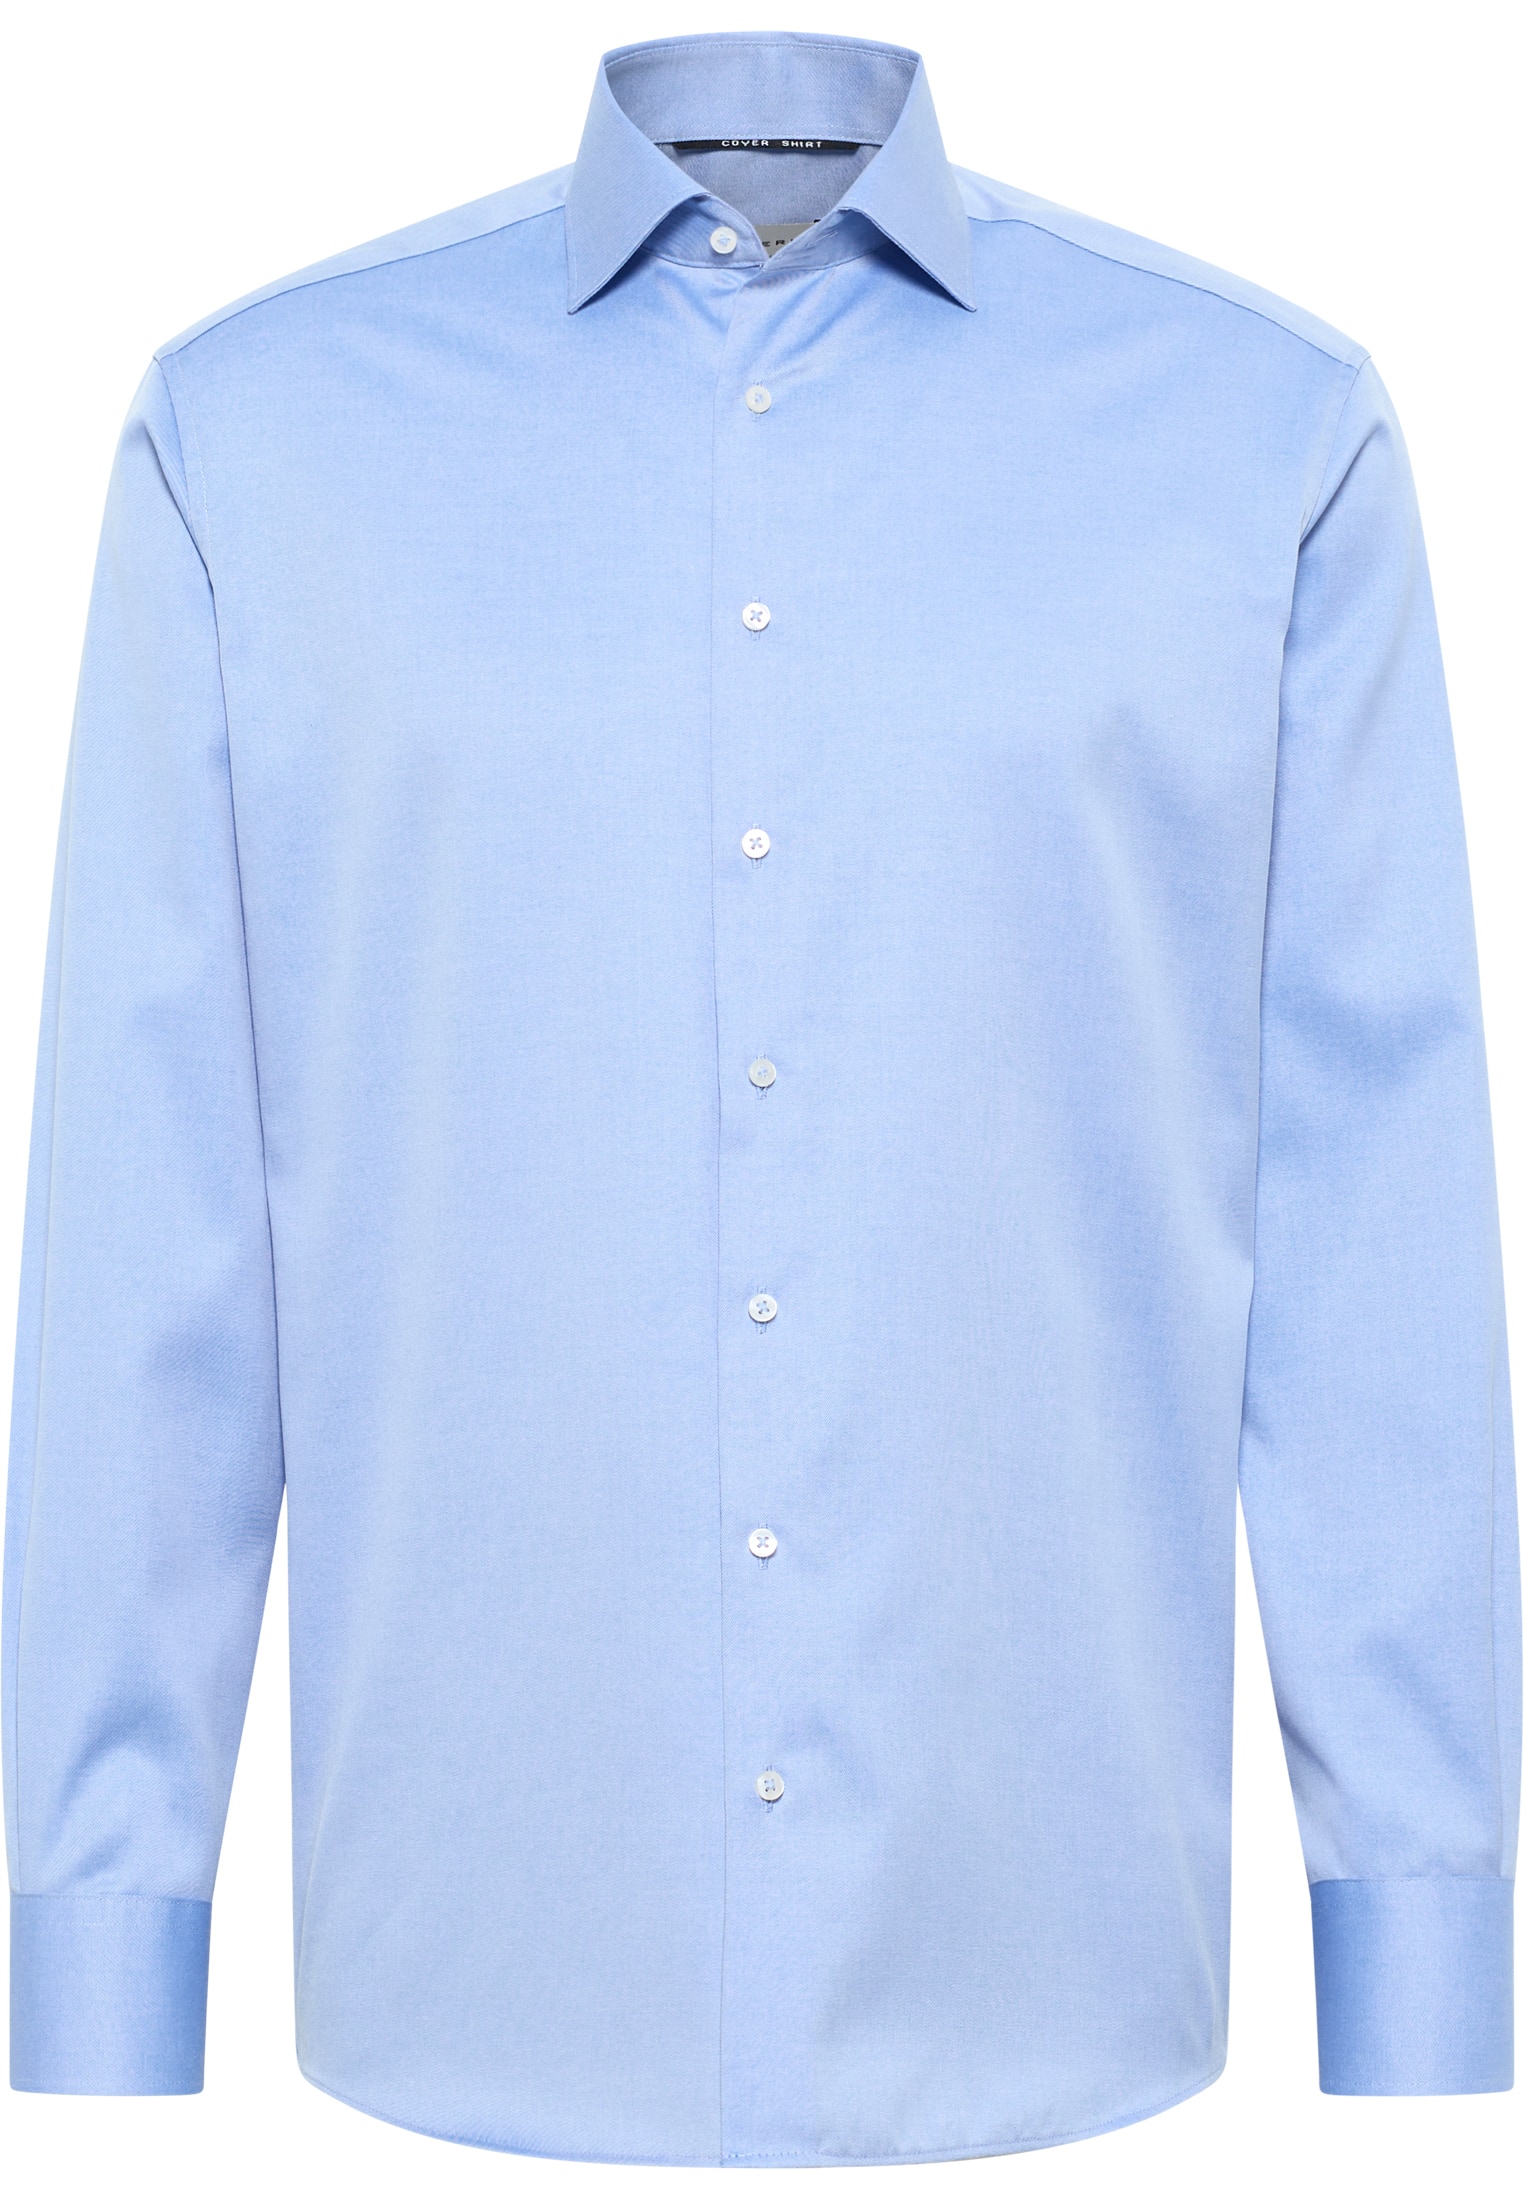 MODERN FIT Cover Shirt in blauw vlakte